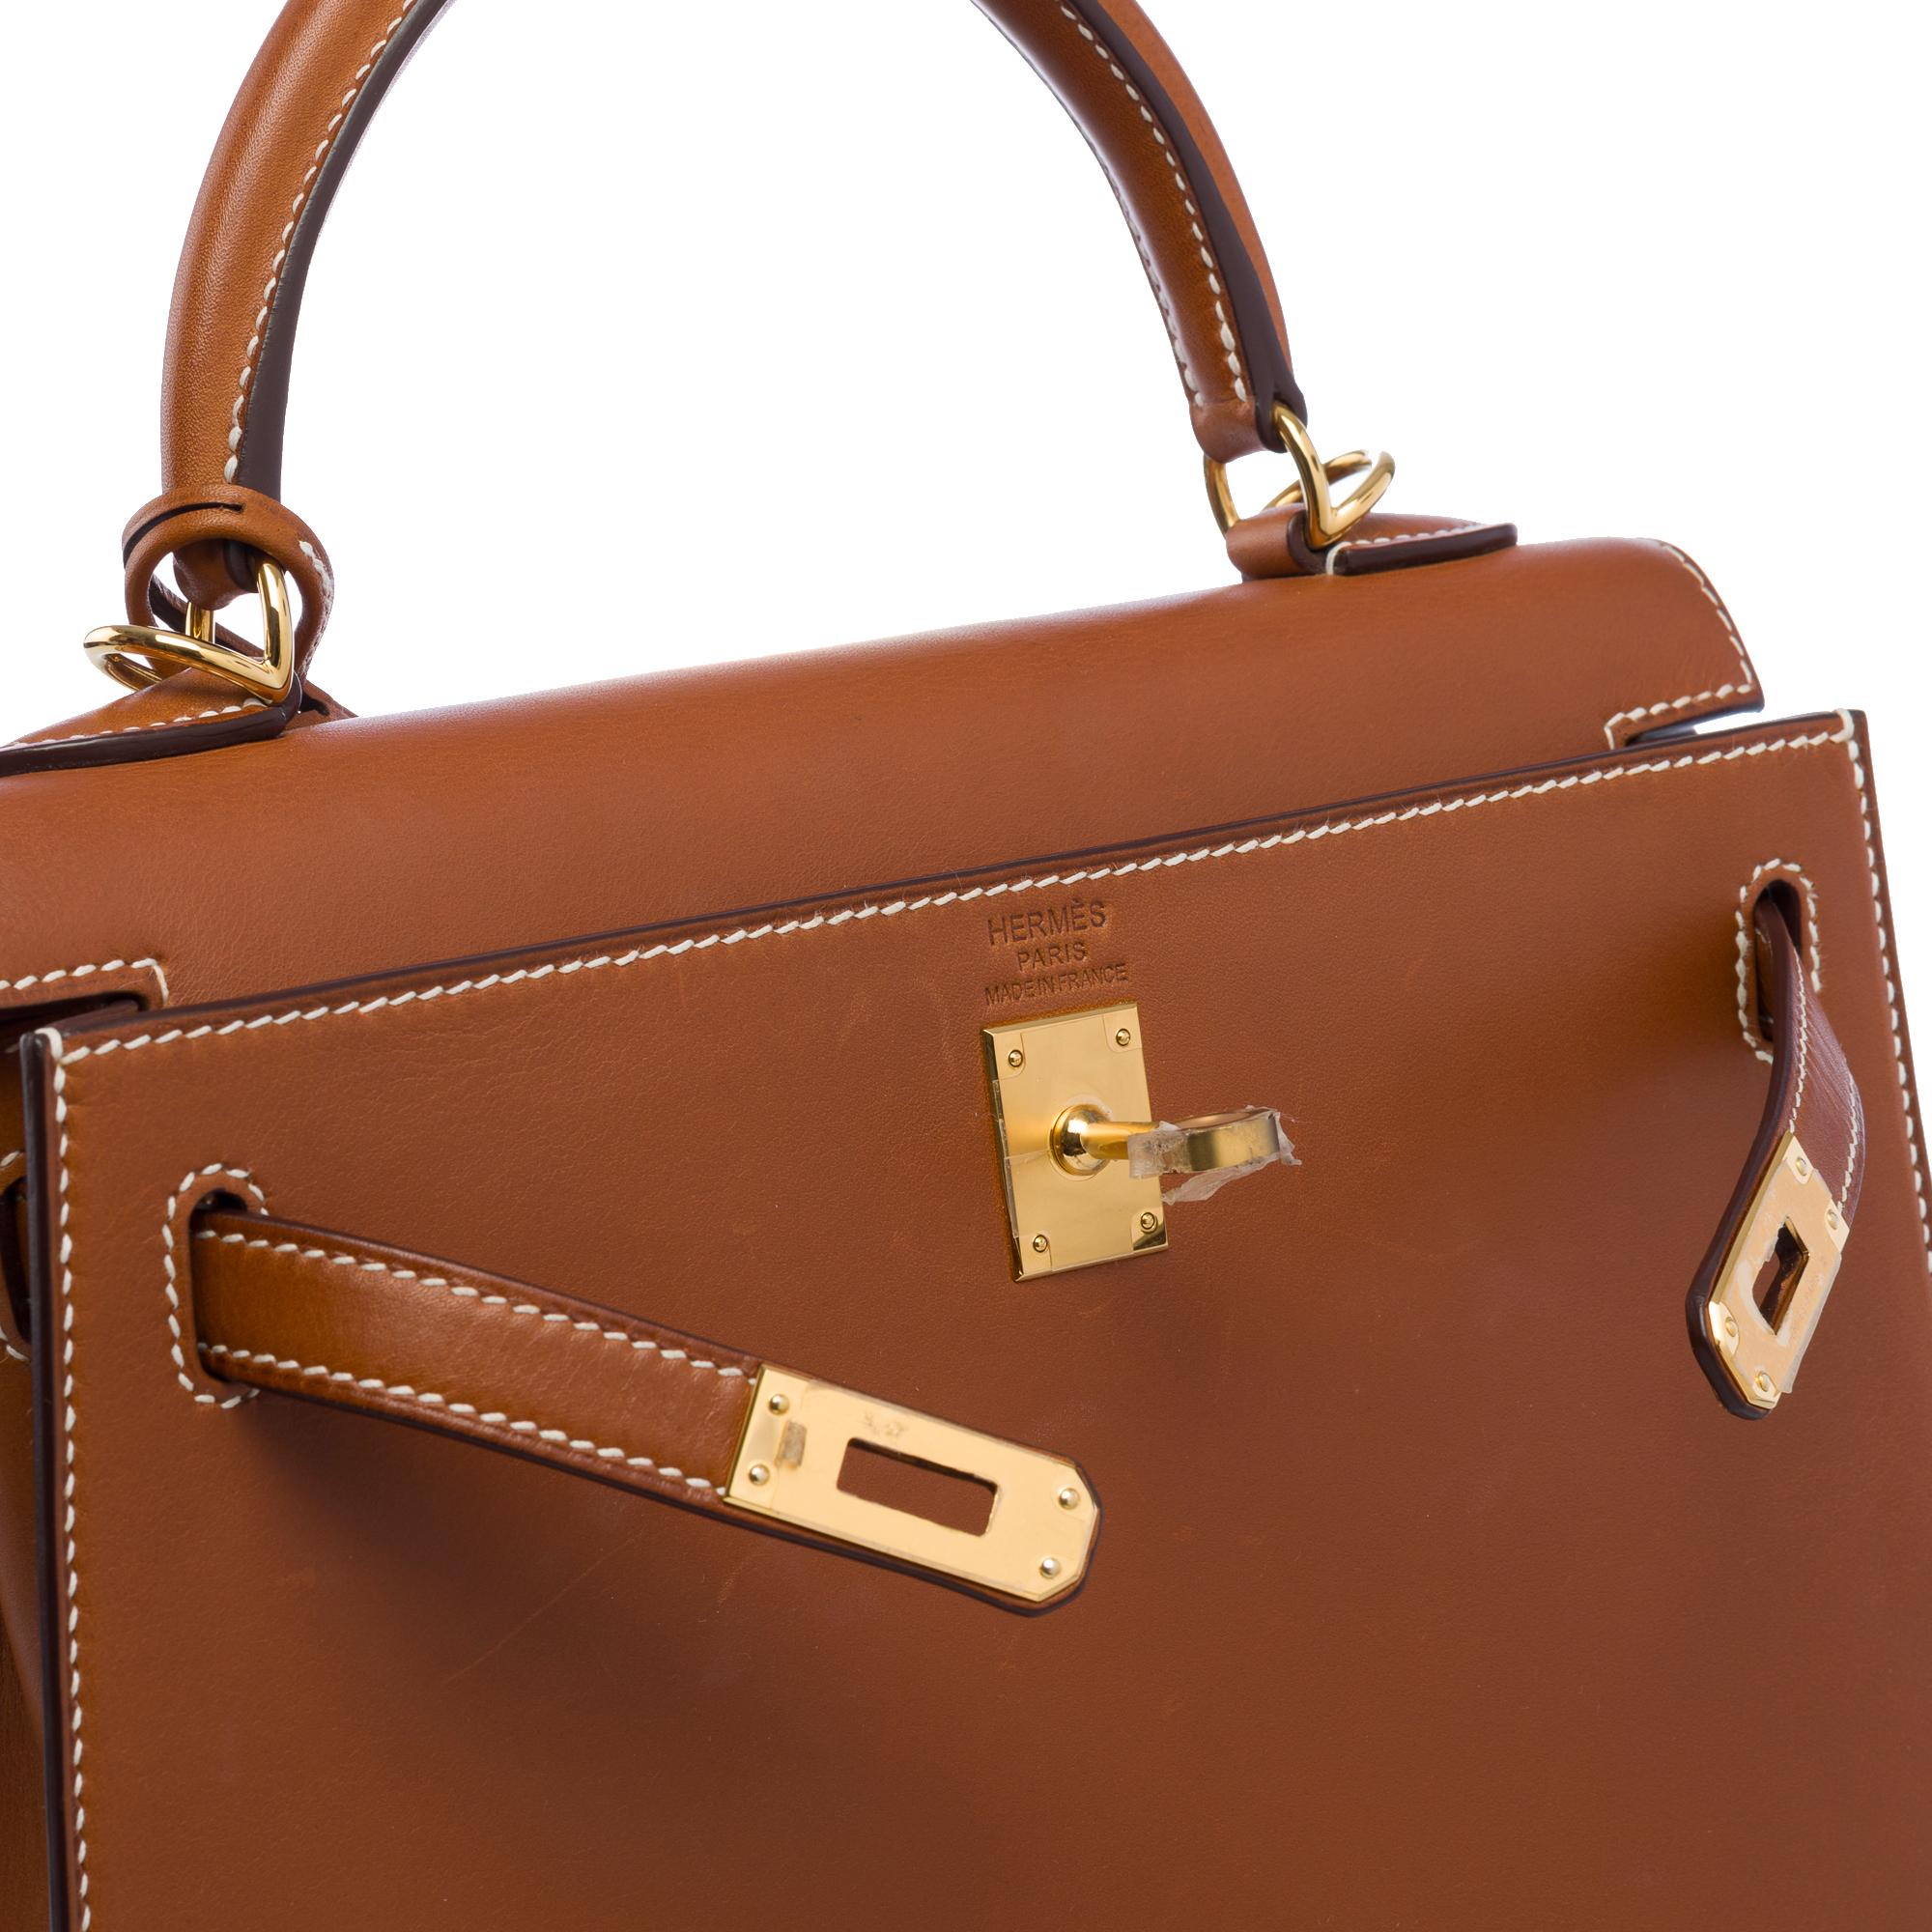 Very Rare Hermès Kelly 25 sellier handbag strap in Gold Barenia leather, GHW 3